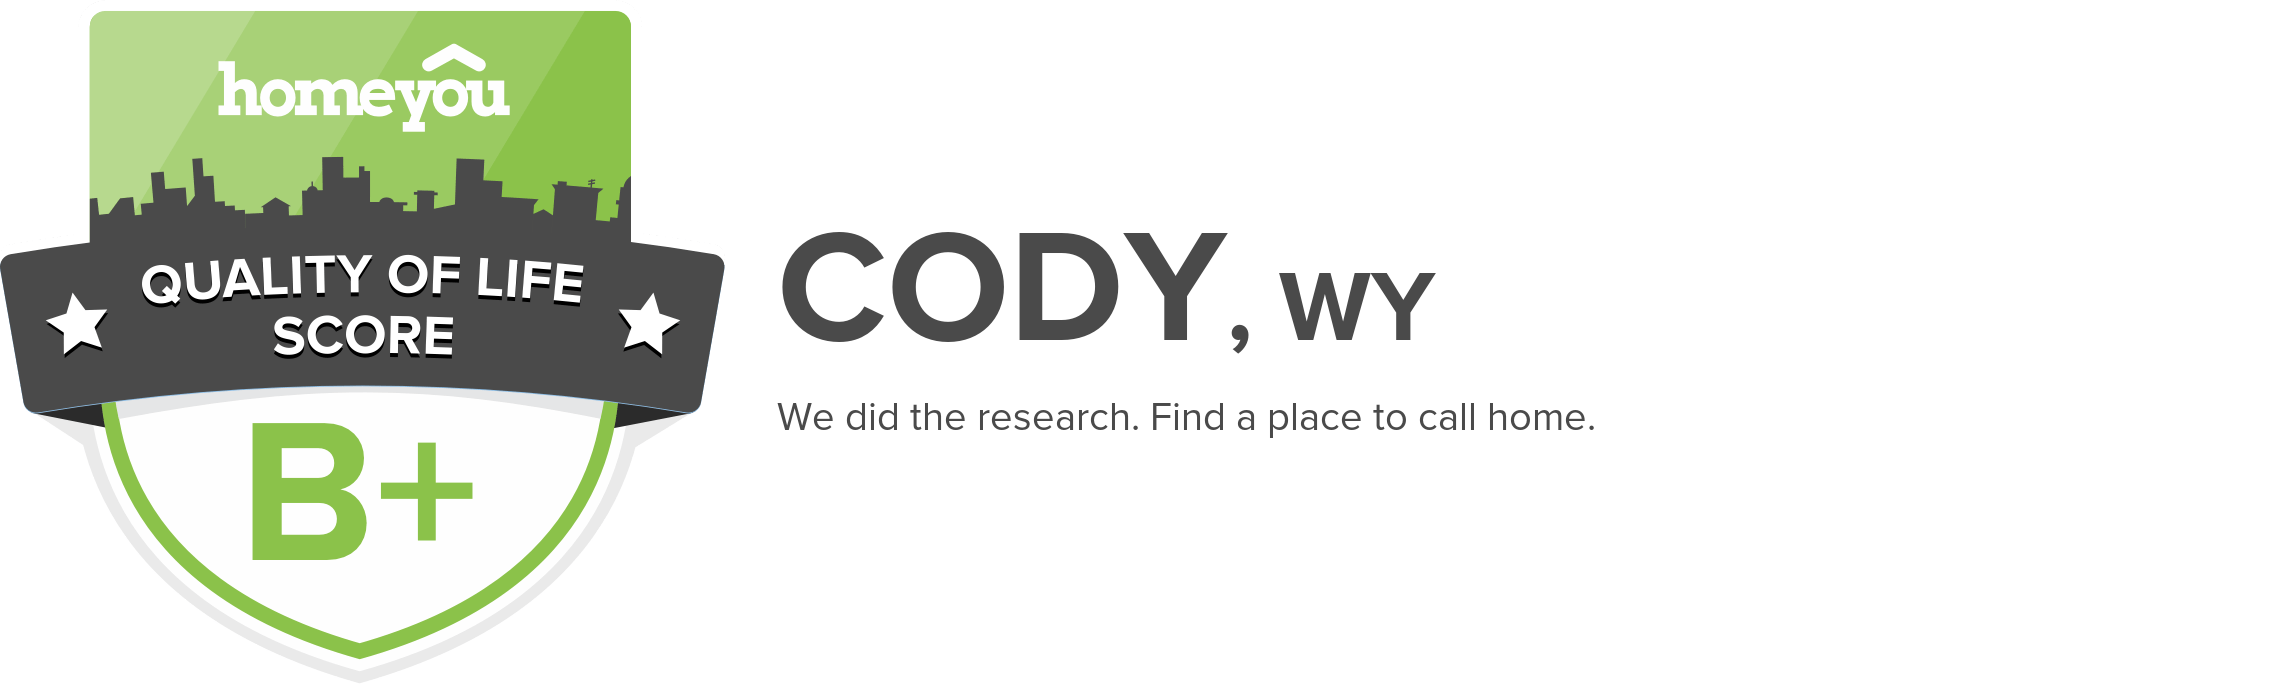 Cody, WY